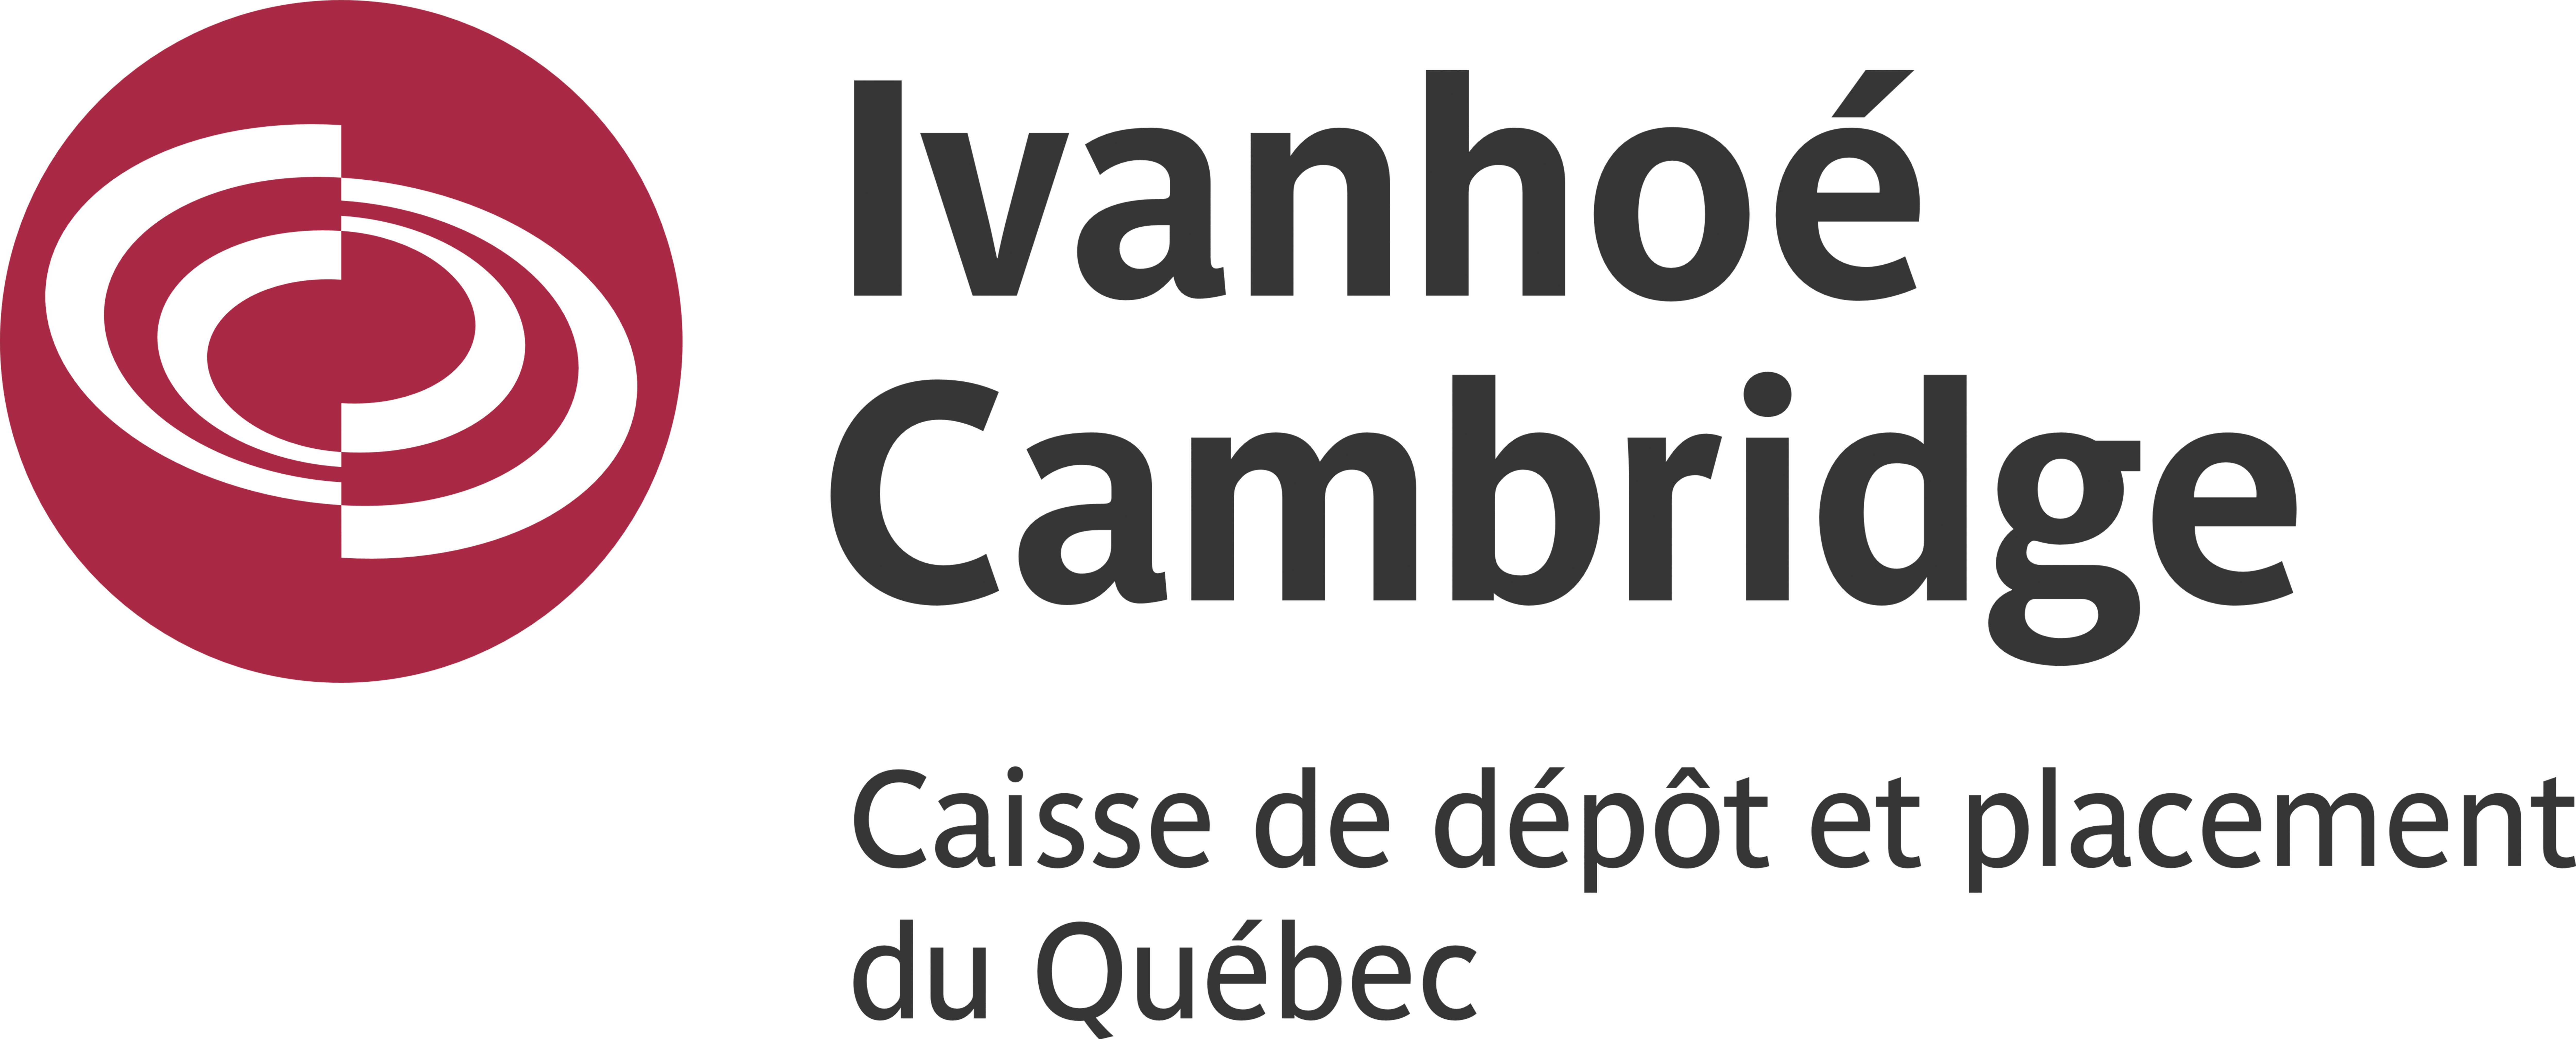 Ivanhoé_Cambridge_logo-300dpi